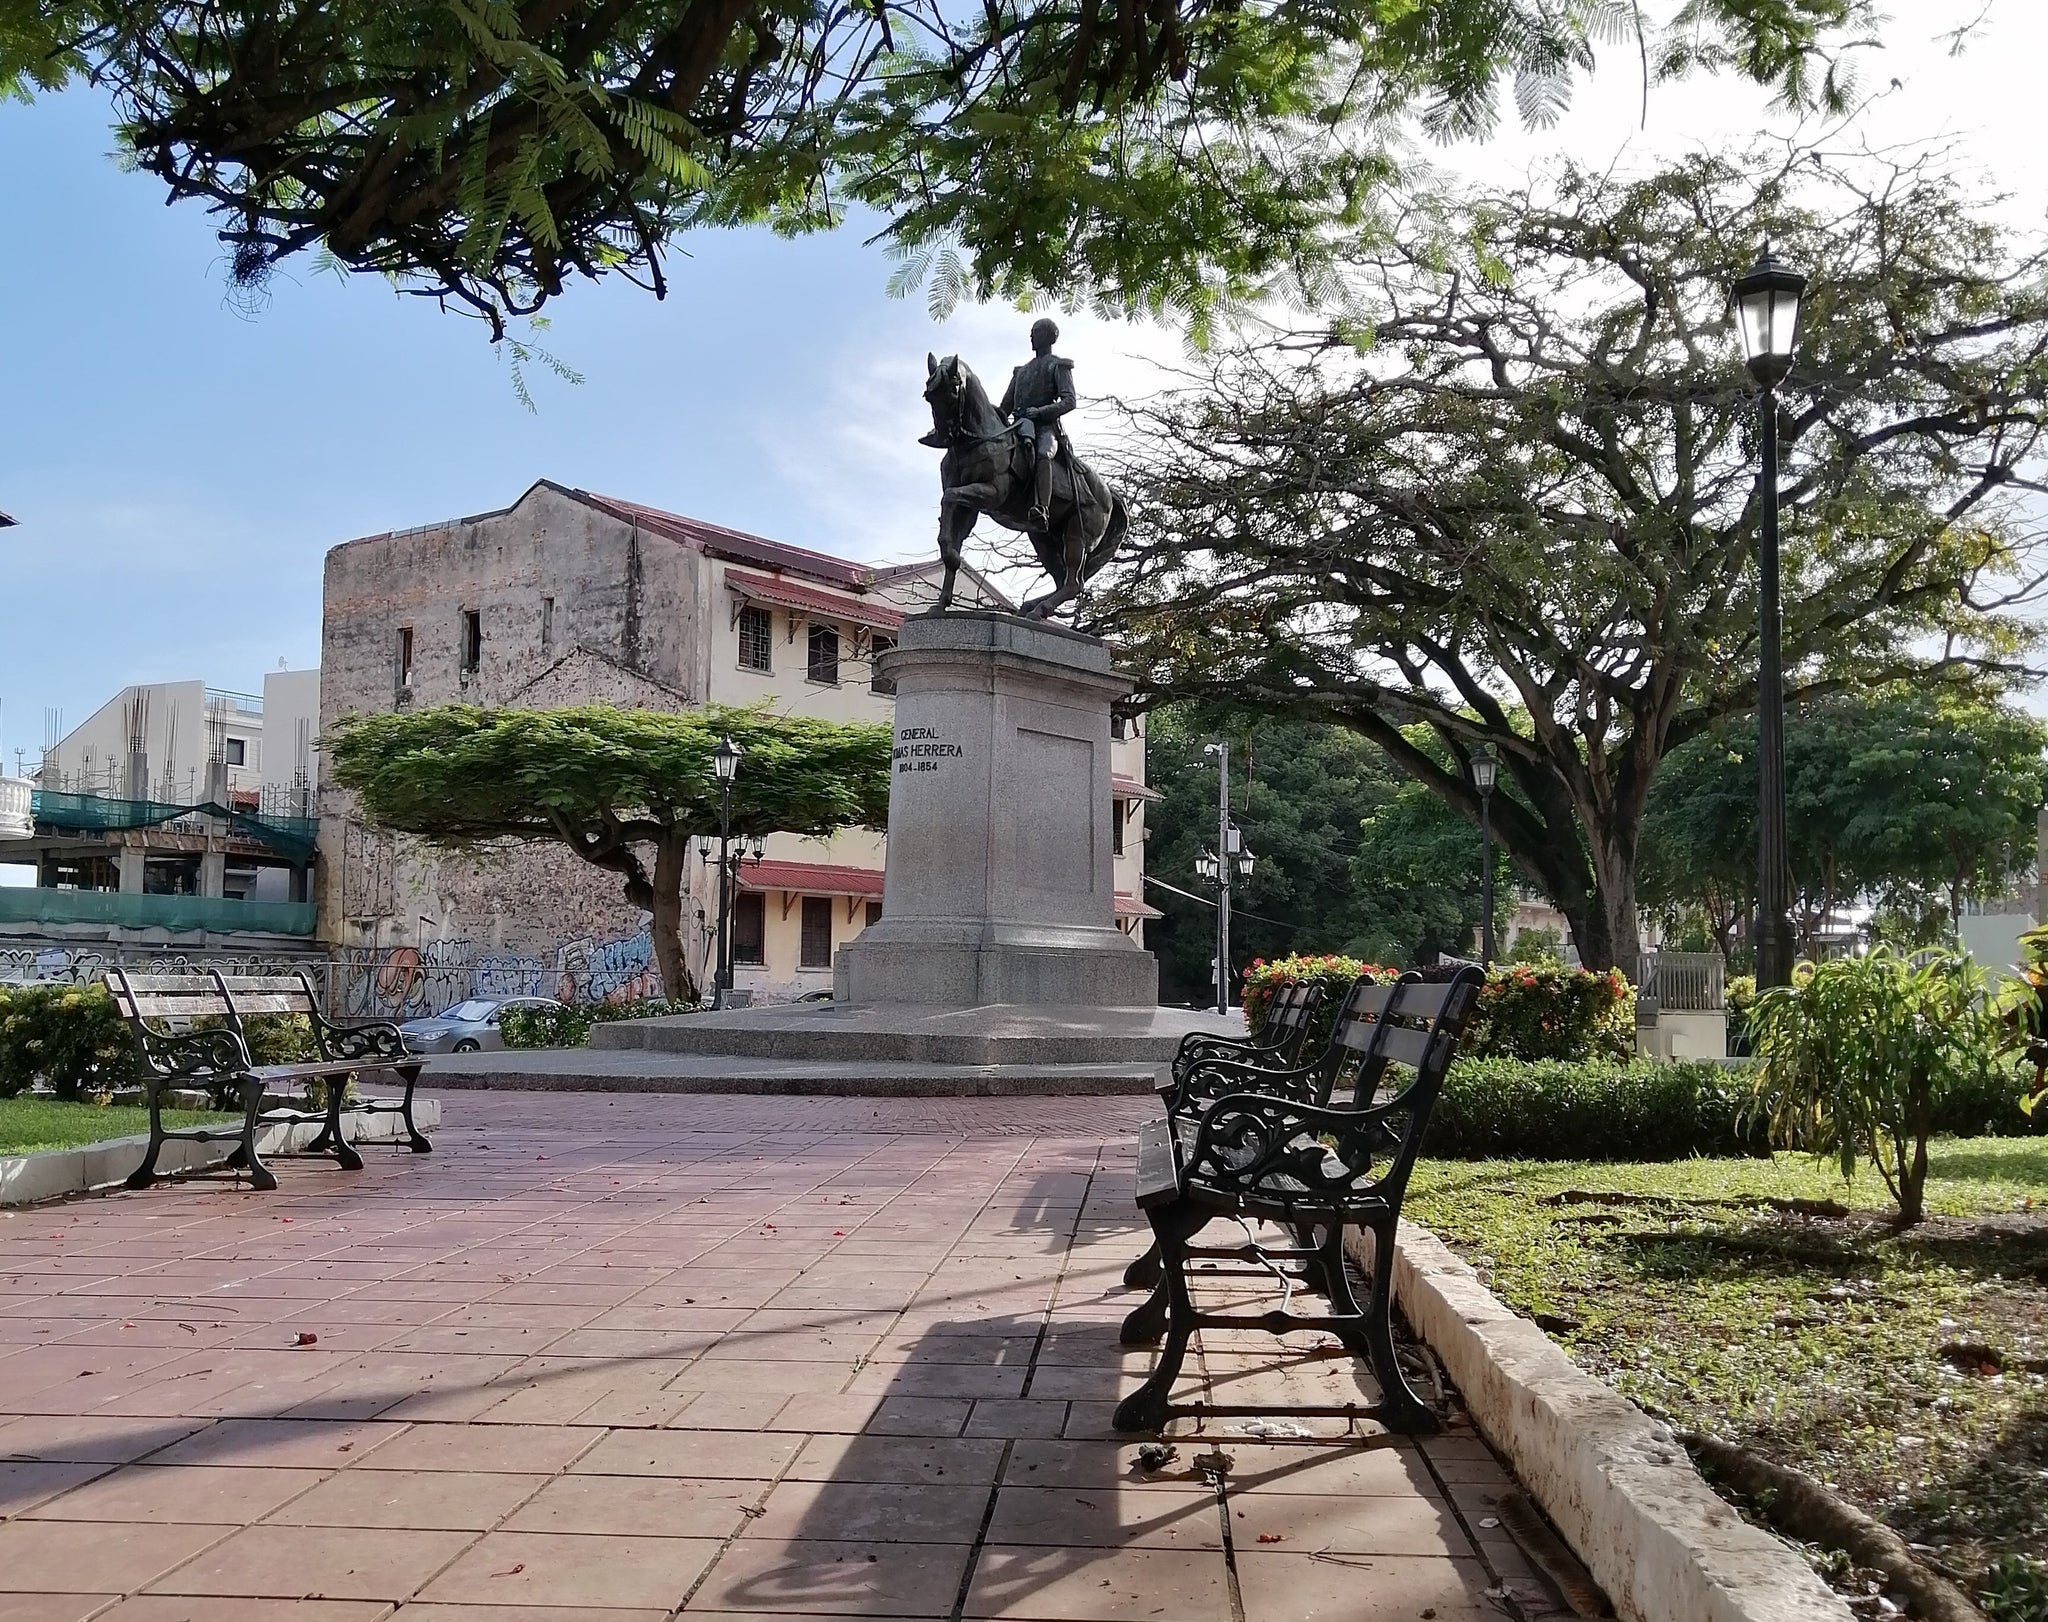 Plaza Herrera:  An ancient bullring in the Republic of Panama